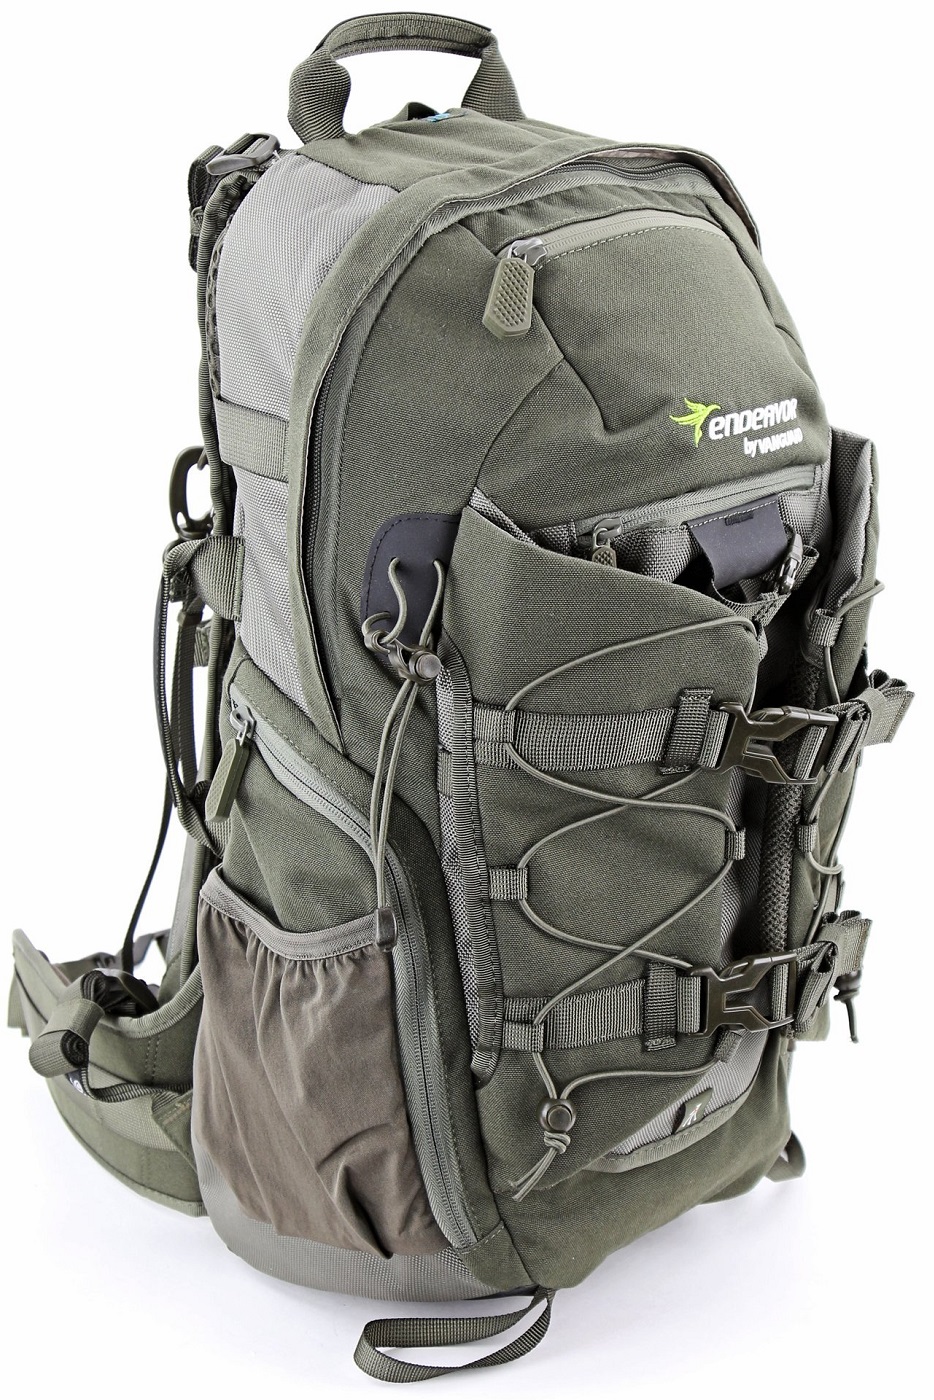 Green 26 L by Vanguard Vanguard Endeavor 1600 Backpack 